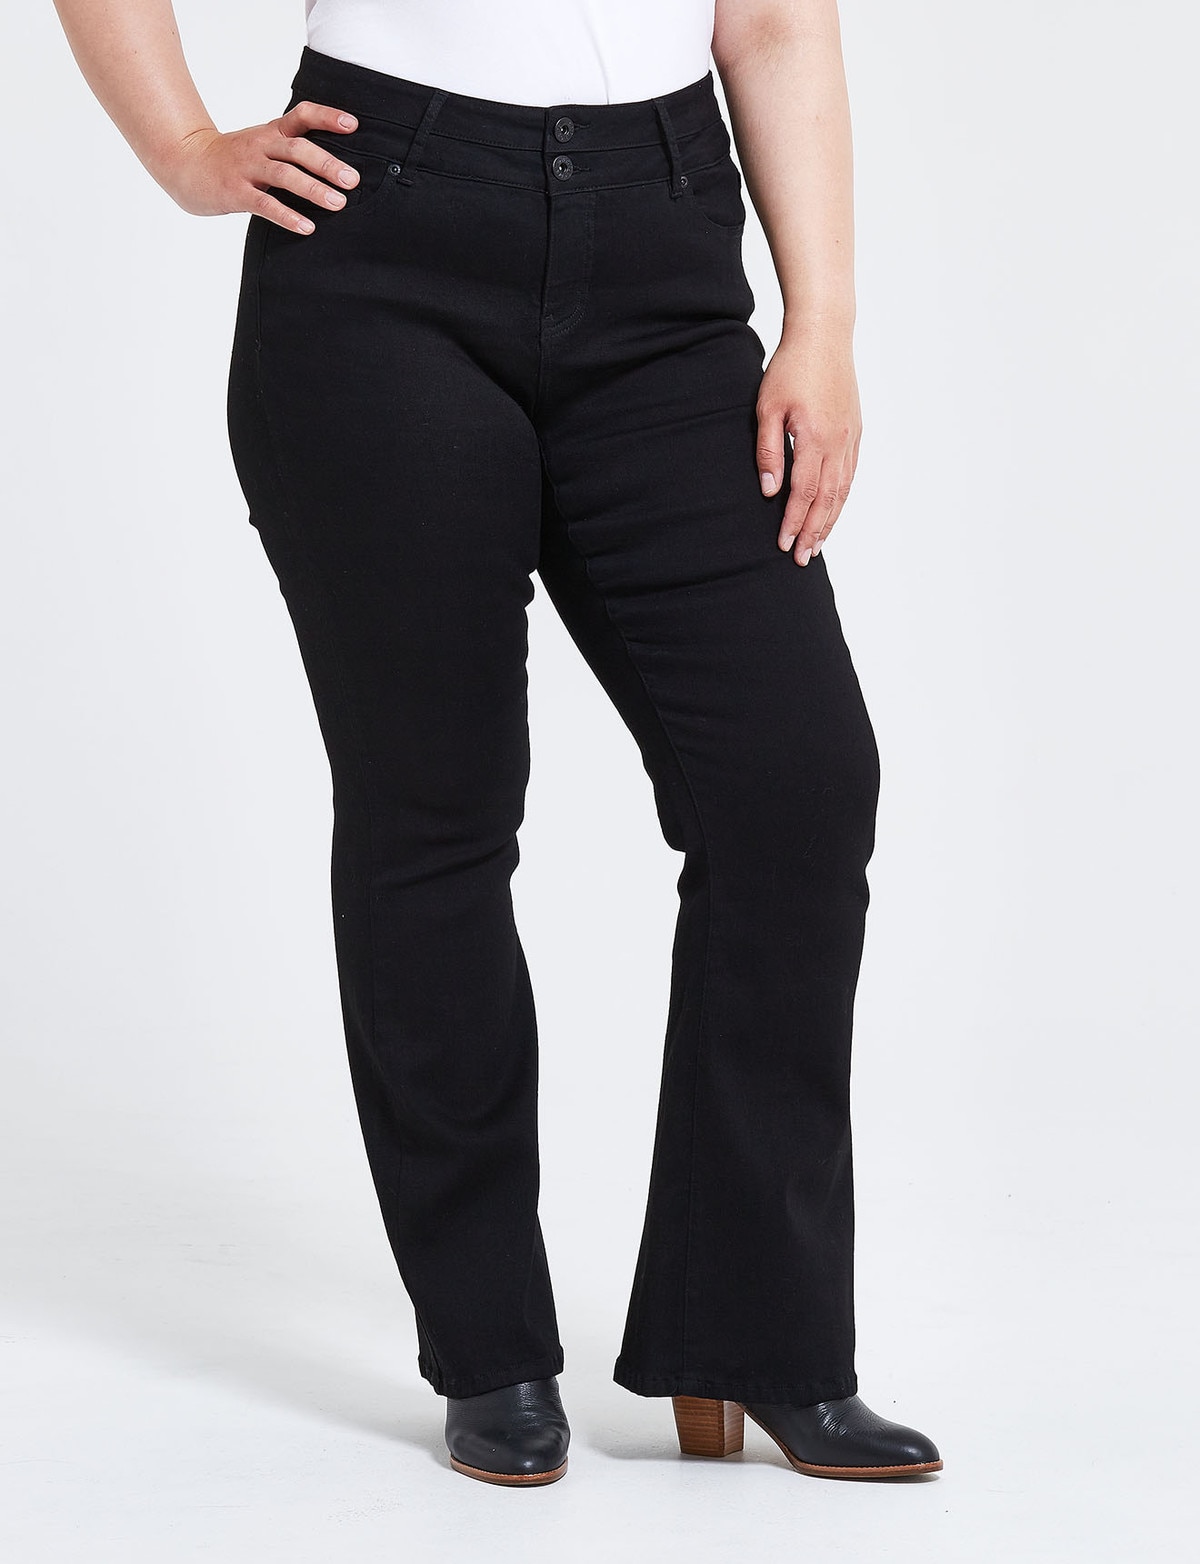 Denim Republic Curve Bootleg Jean, Jet Black - Jeans, Pants & Shorts